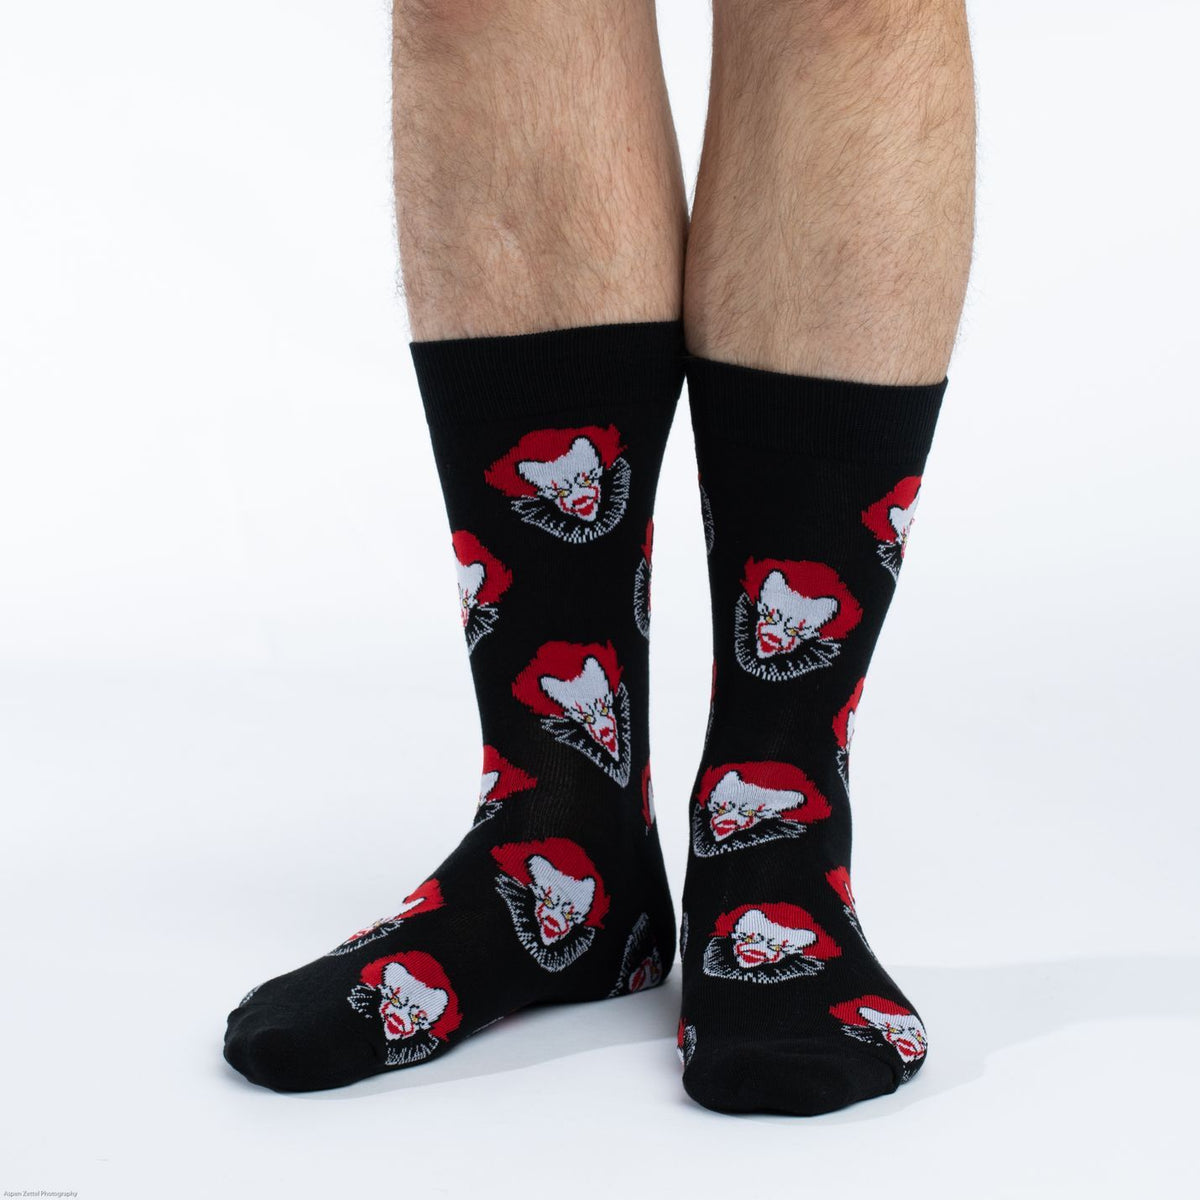 Men's Scary Clown Halloween Socks – Good Luck Sock